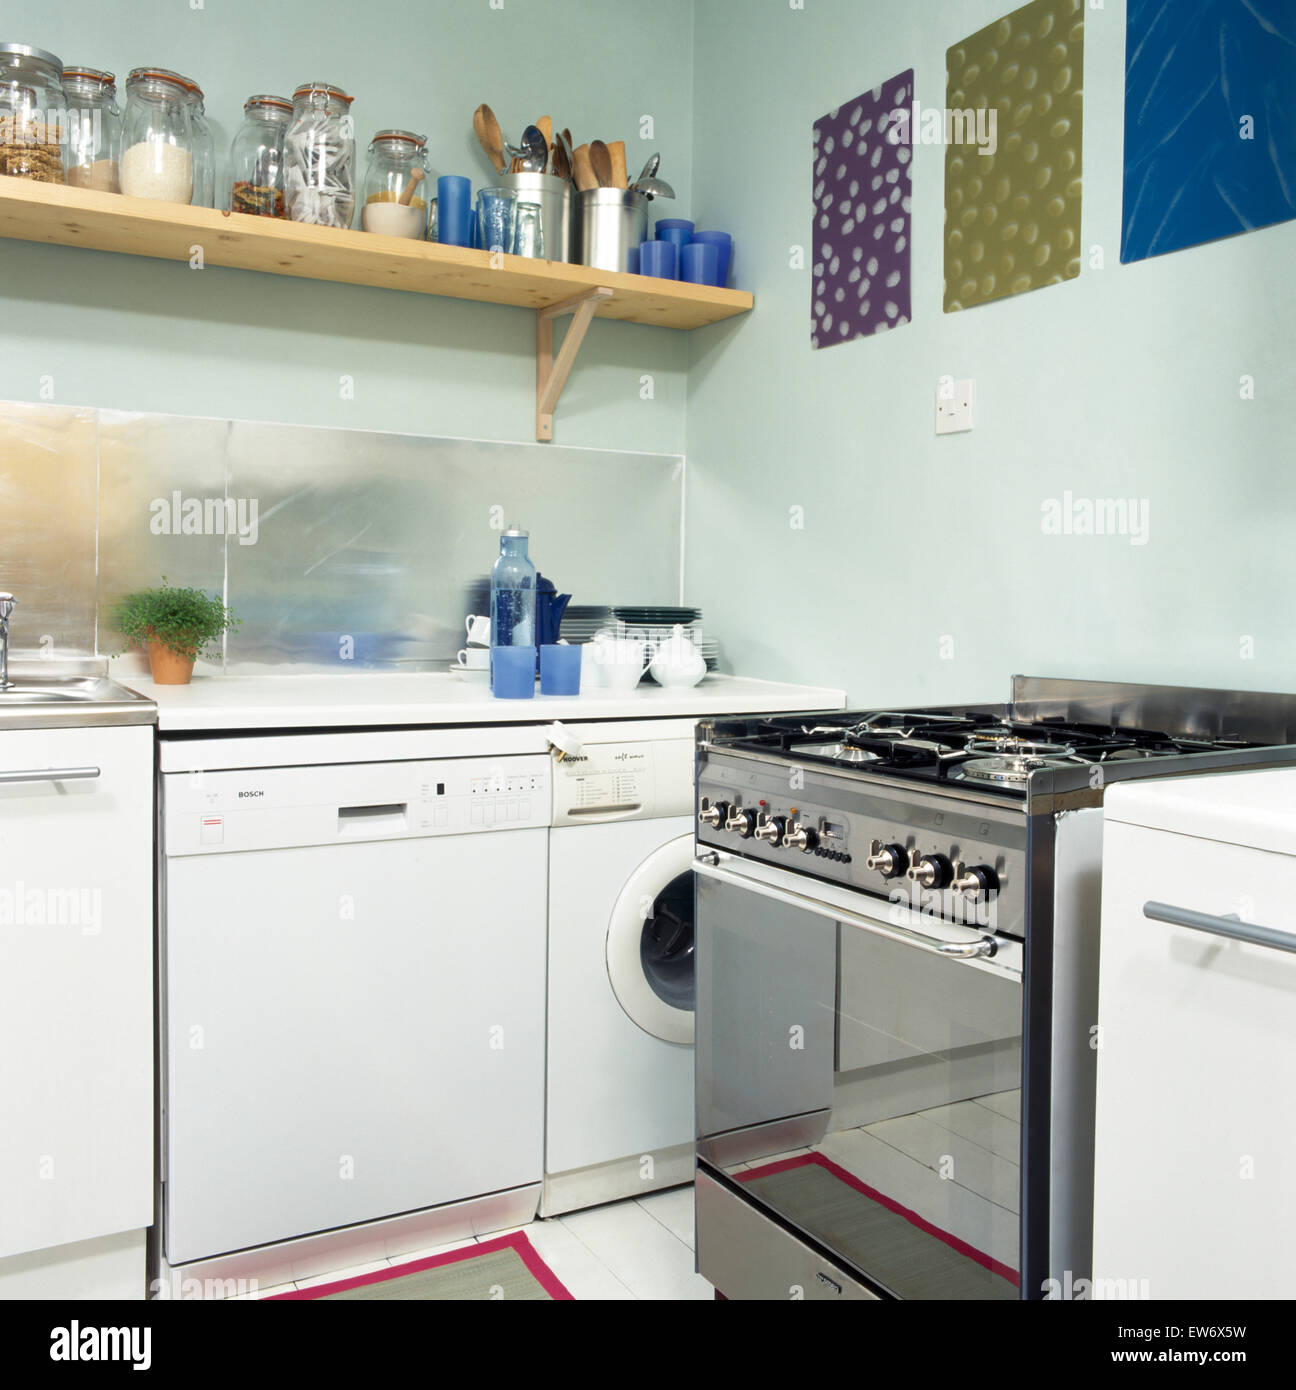 Range oven and dishwasher in nineties economy style kitchen Stock Photo